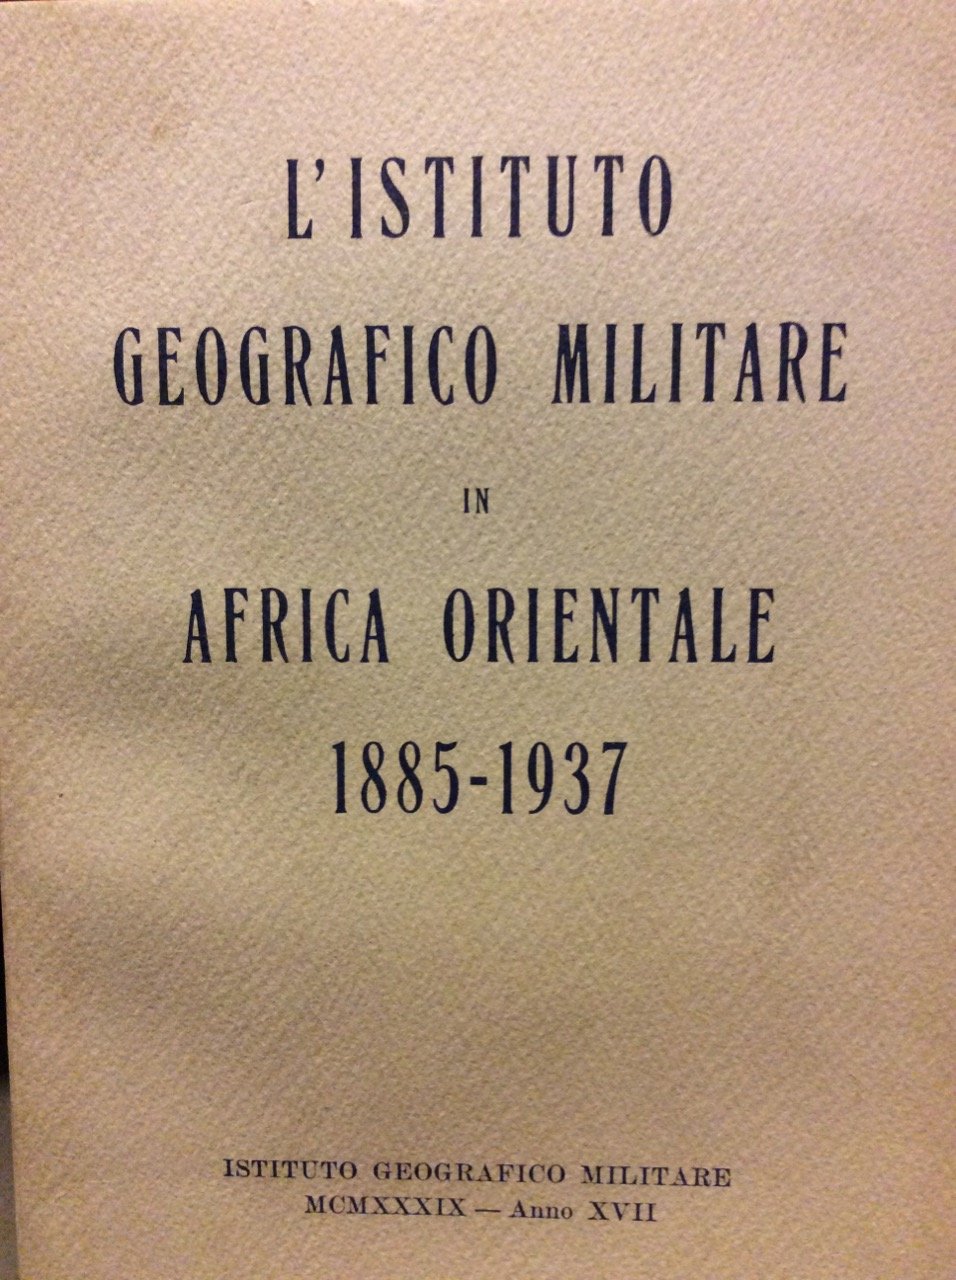 L'ISTITUTO GEOGRAFICO MILITARE IN AFRICA ORIENTALE 1885-1937.